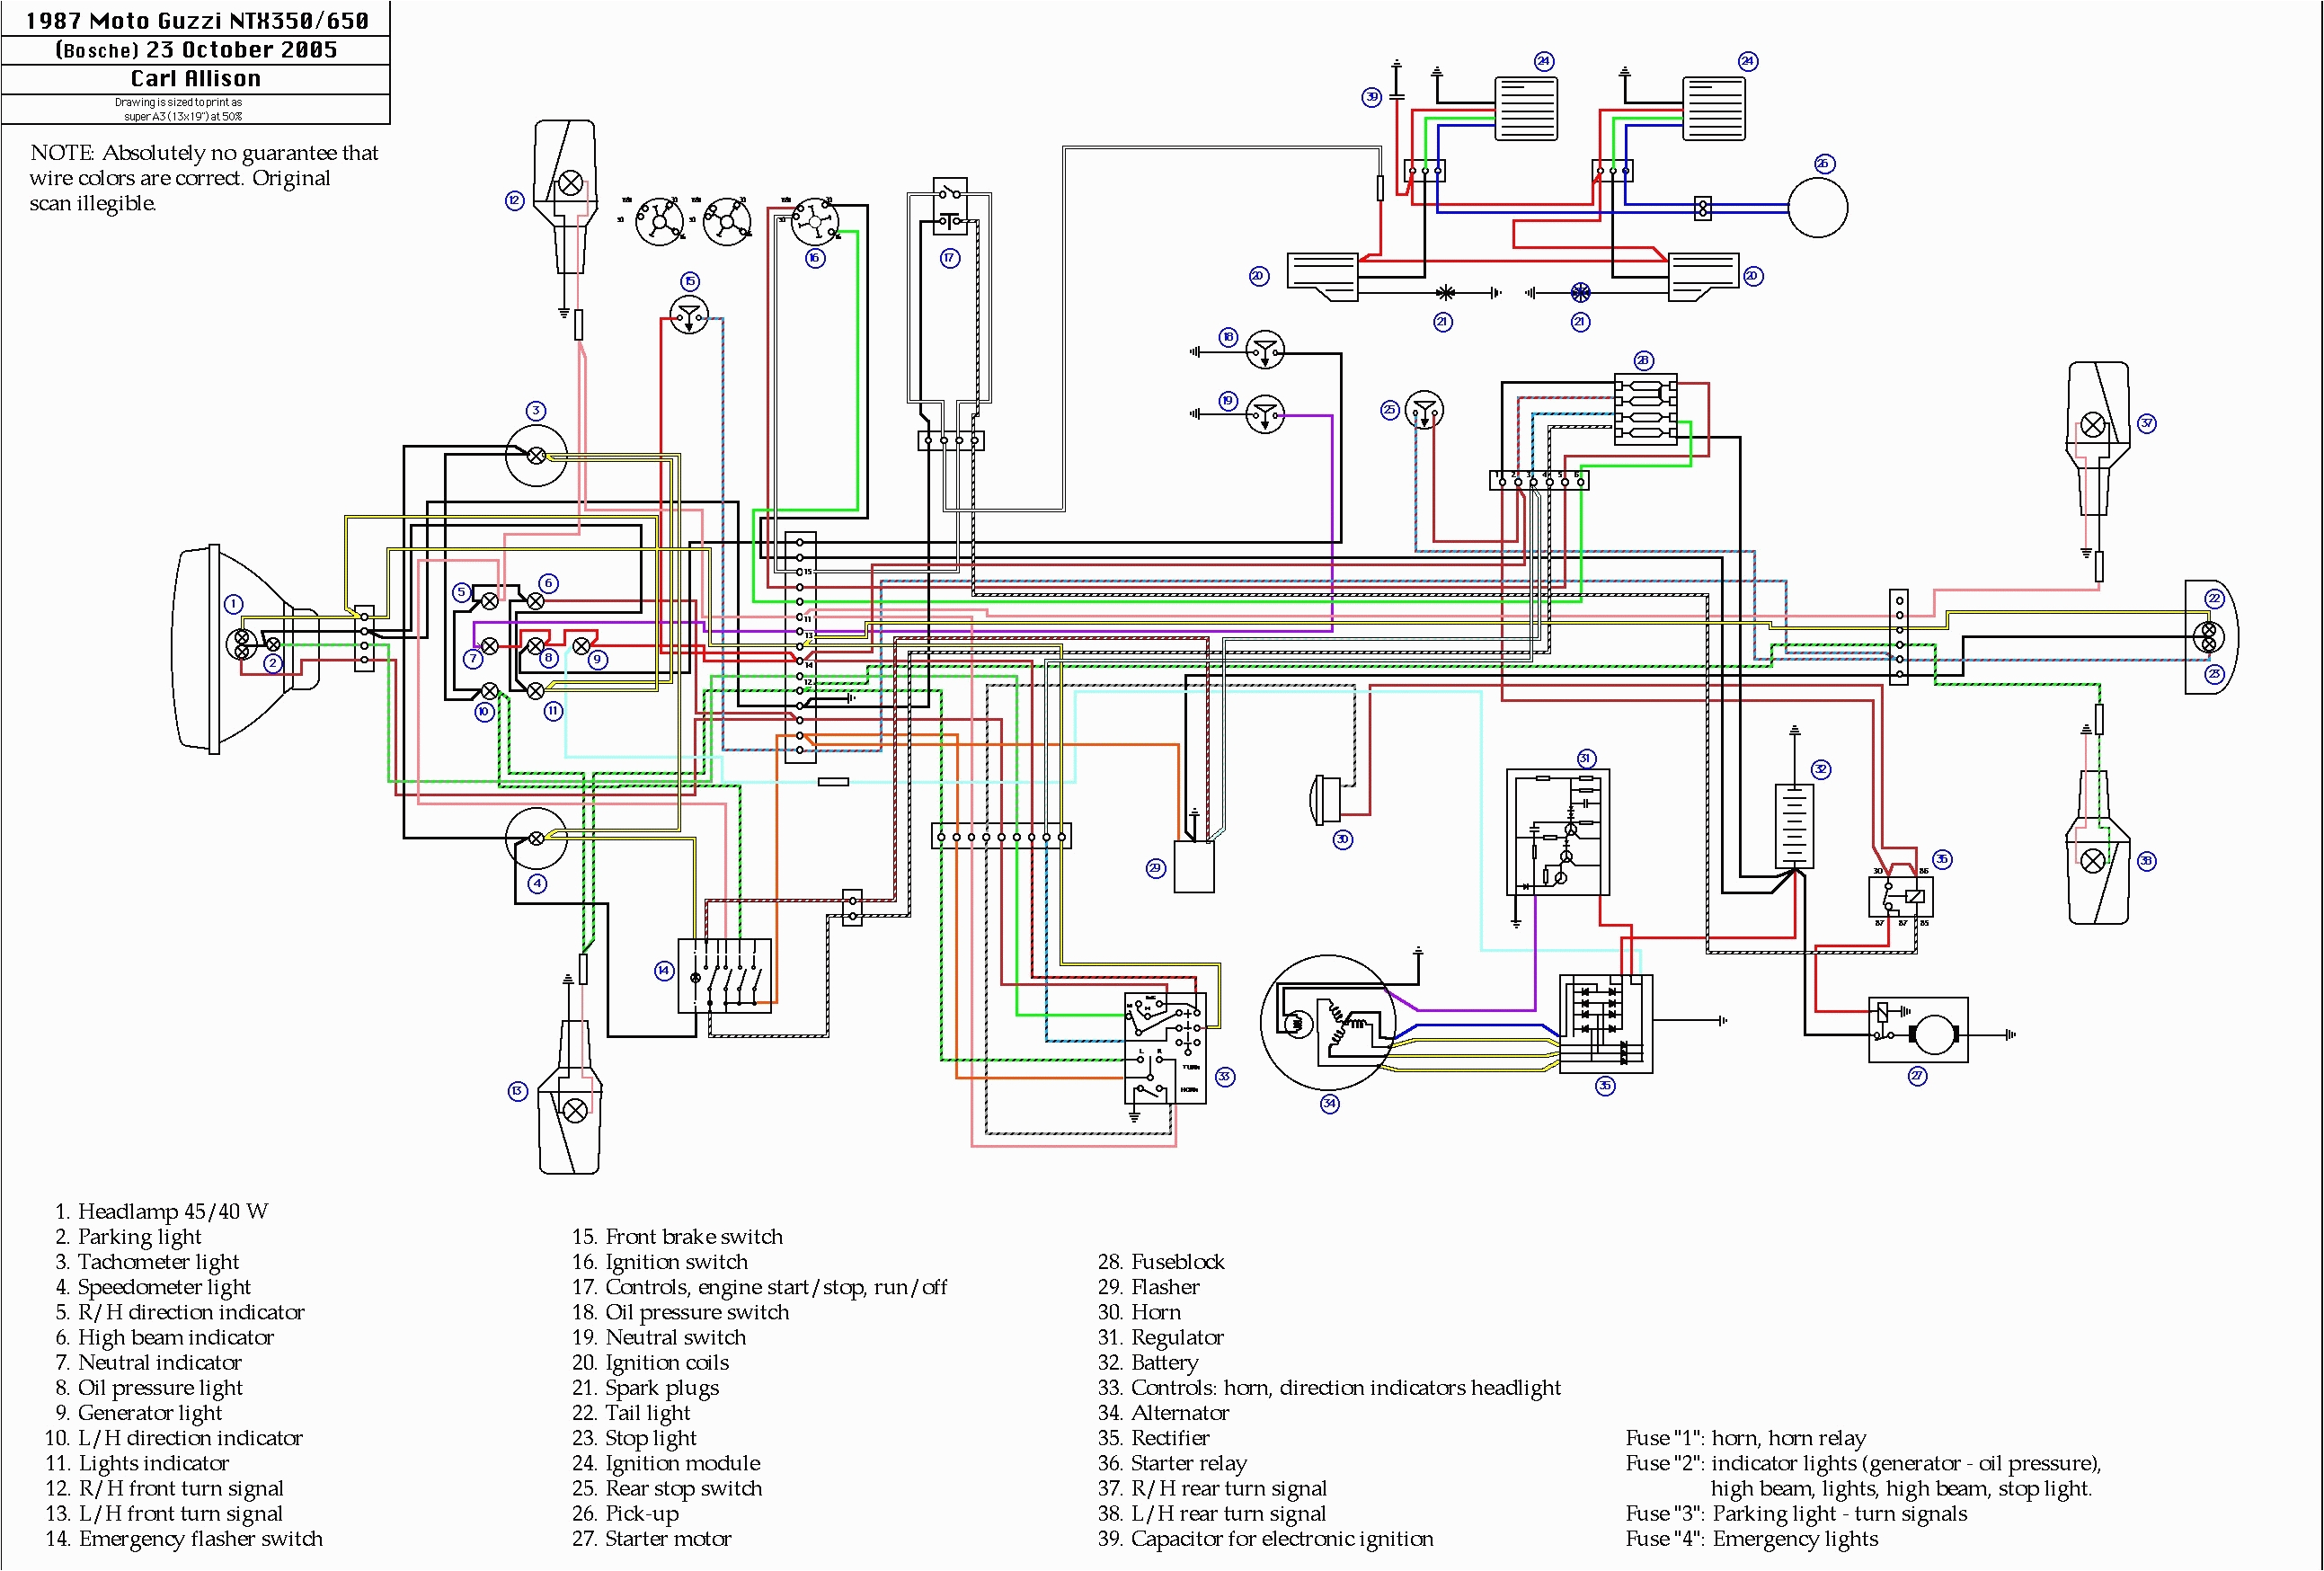 wiring diagram for yamaha rx 50 wiring diagram mega cb 7 50 wiring diagram